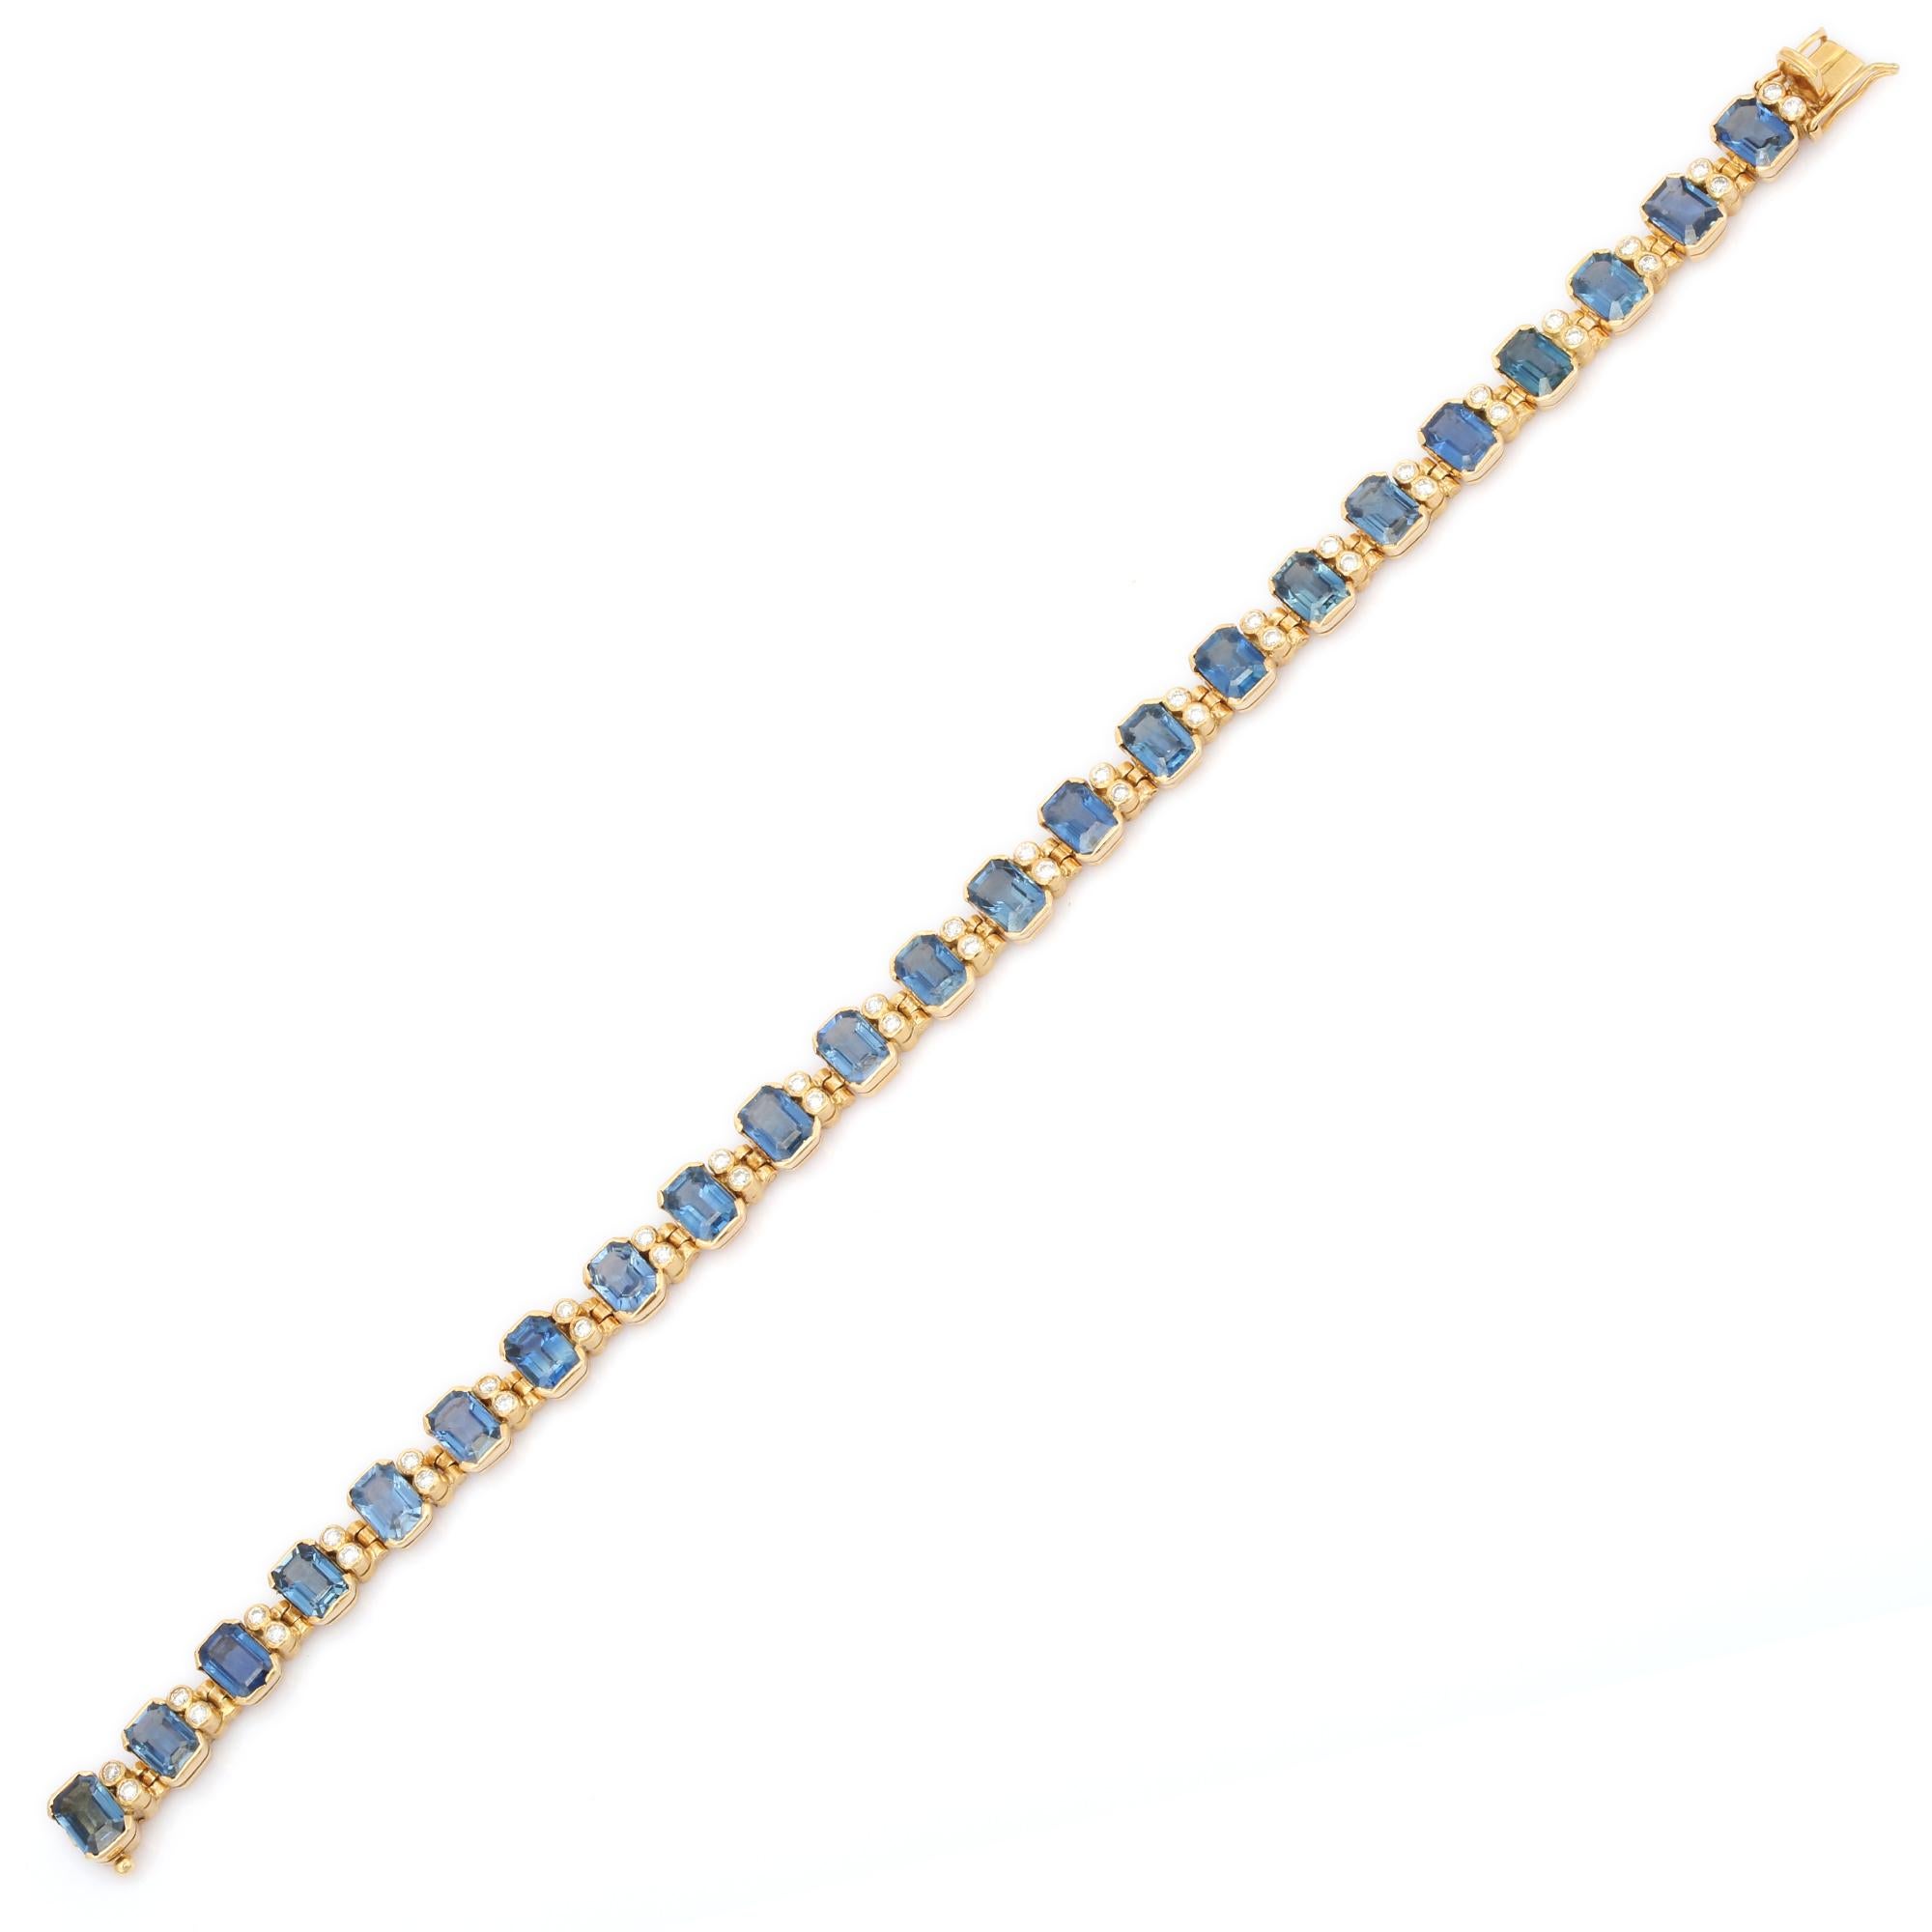 25.5 Carat Sapphire and Diamond Bezel Set Tennis Bracelet in 18K Yellow Gold For Sale 1